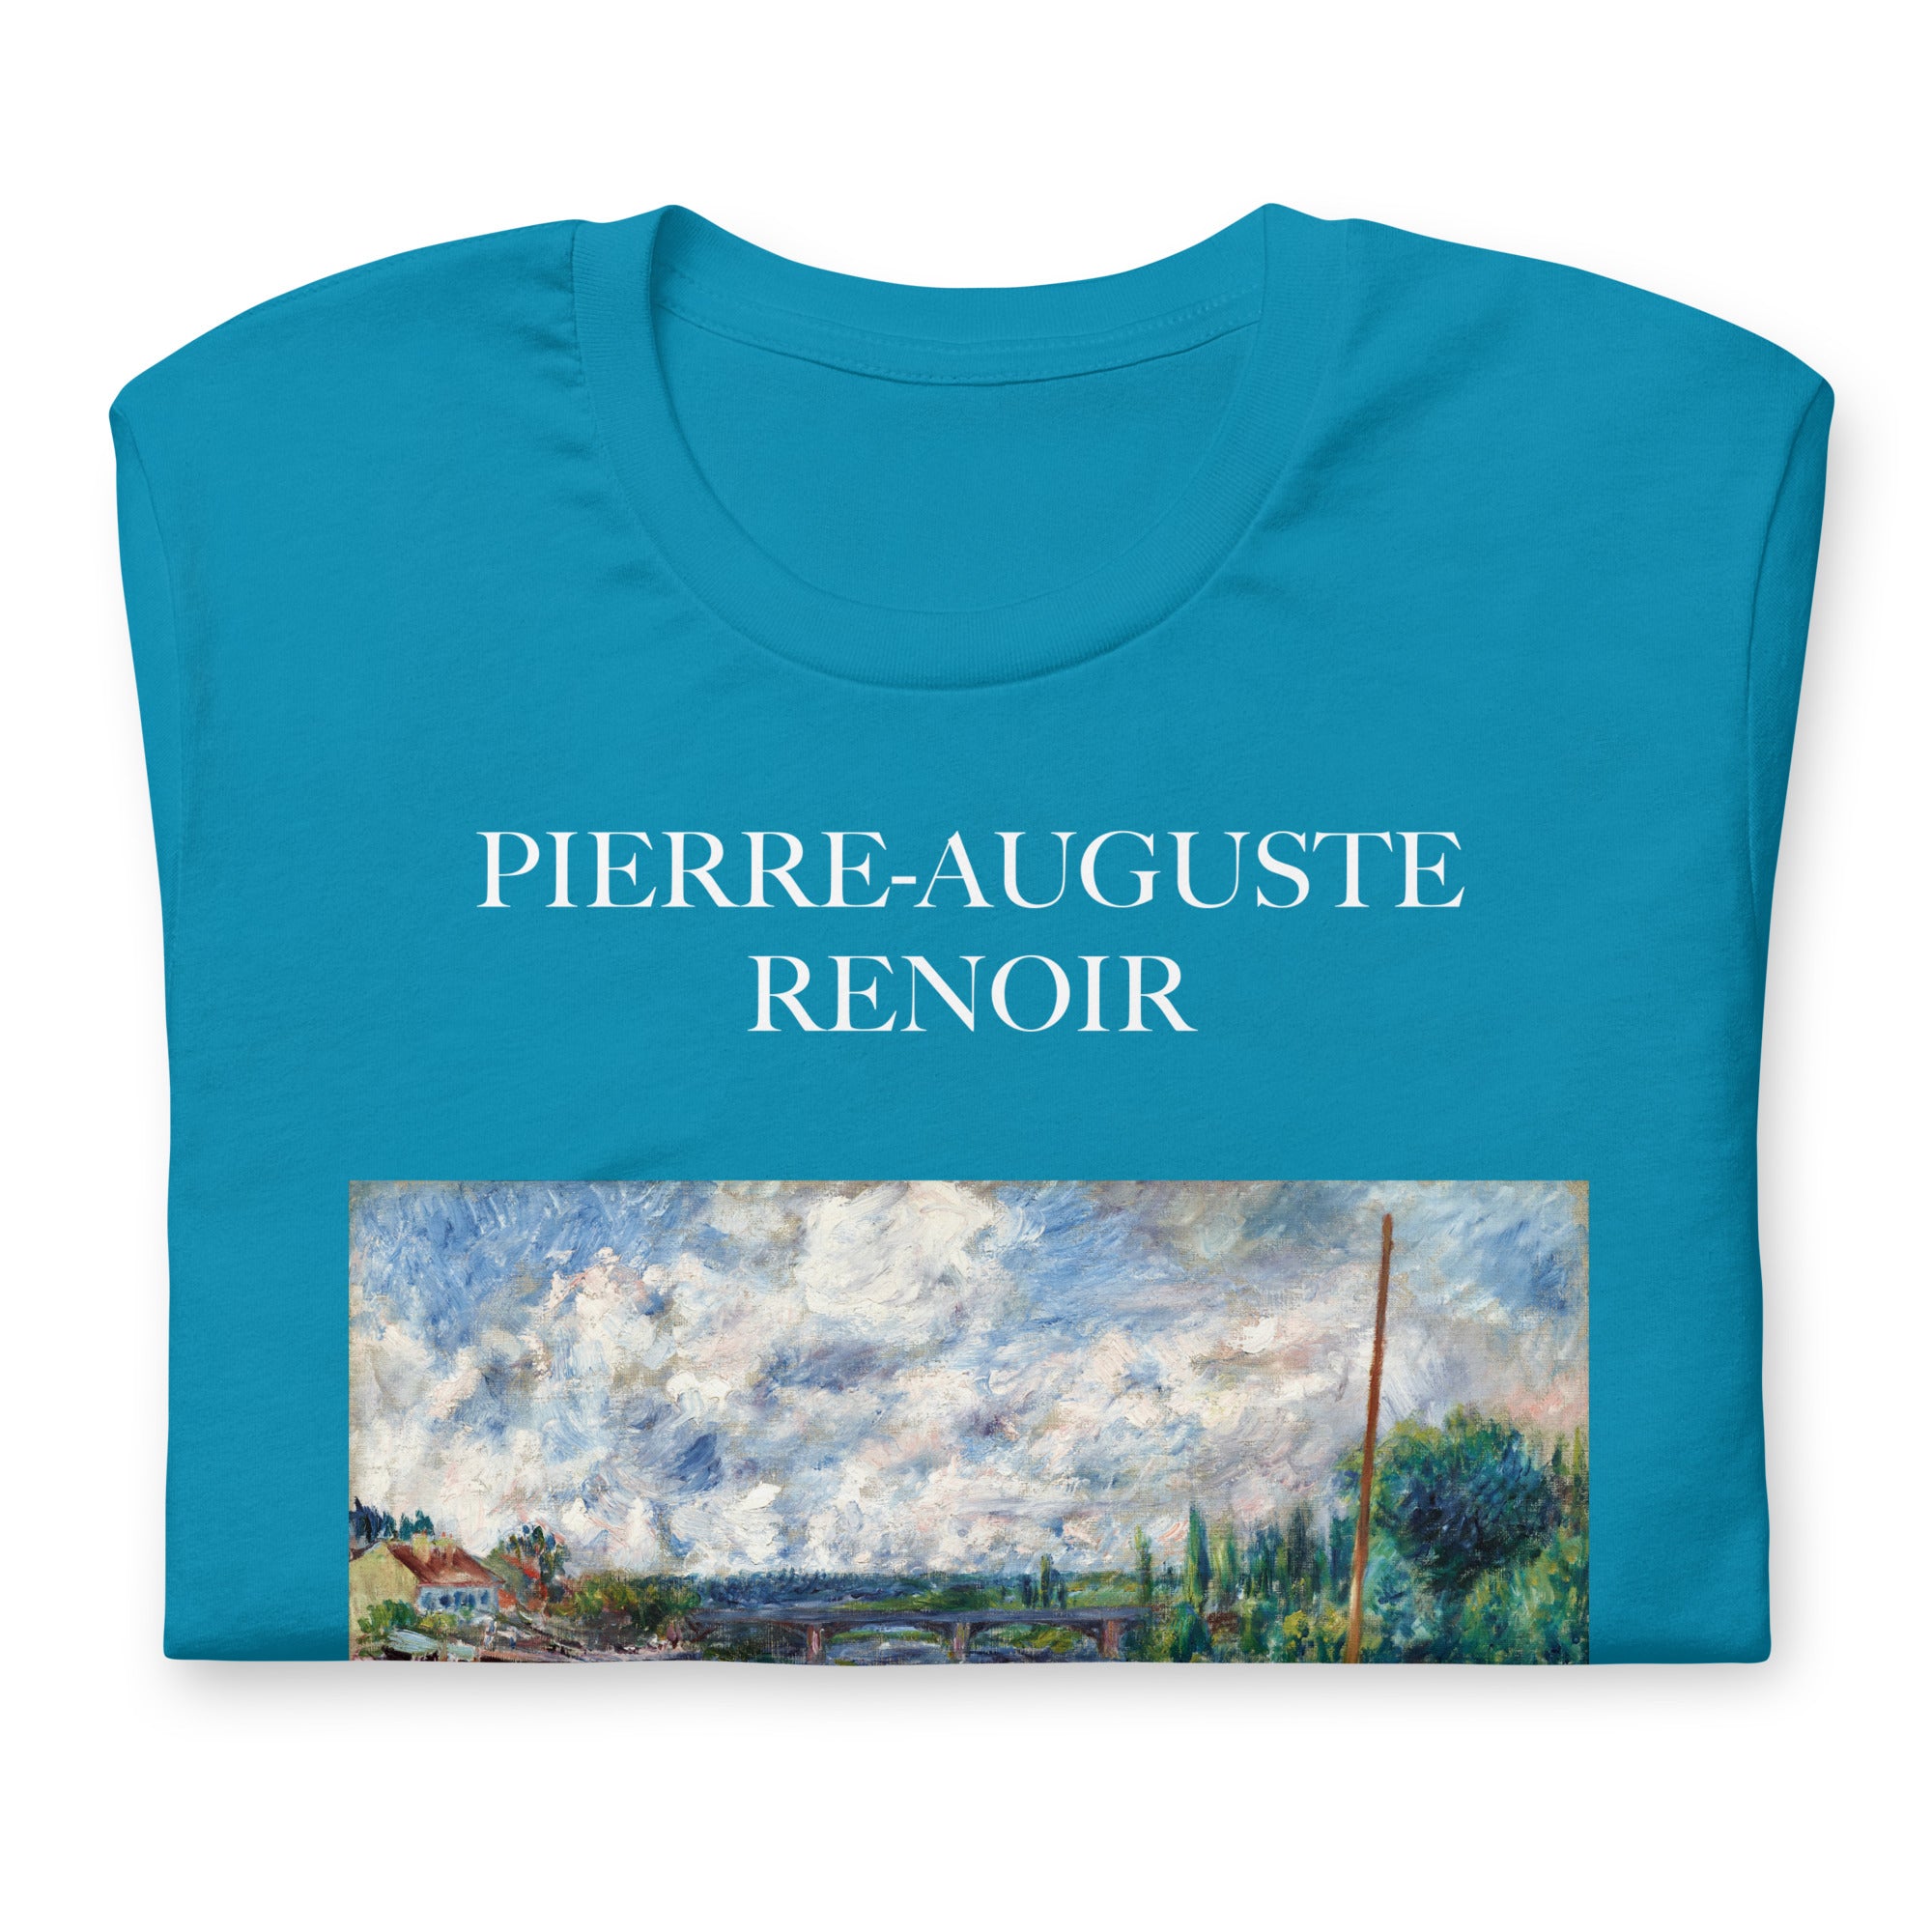 Pierre-Auguste Renoir 'The Seine at Chatou' Famous Painting T-Shirt | Unisex Classic Art Tee